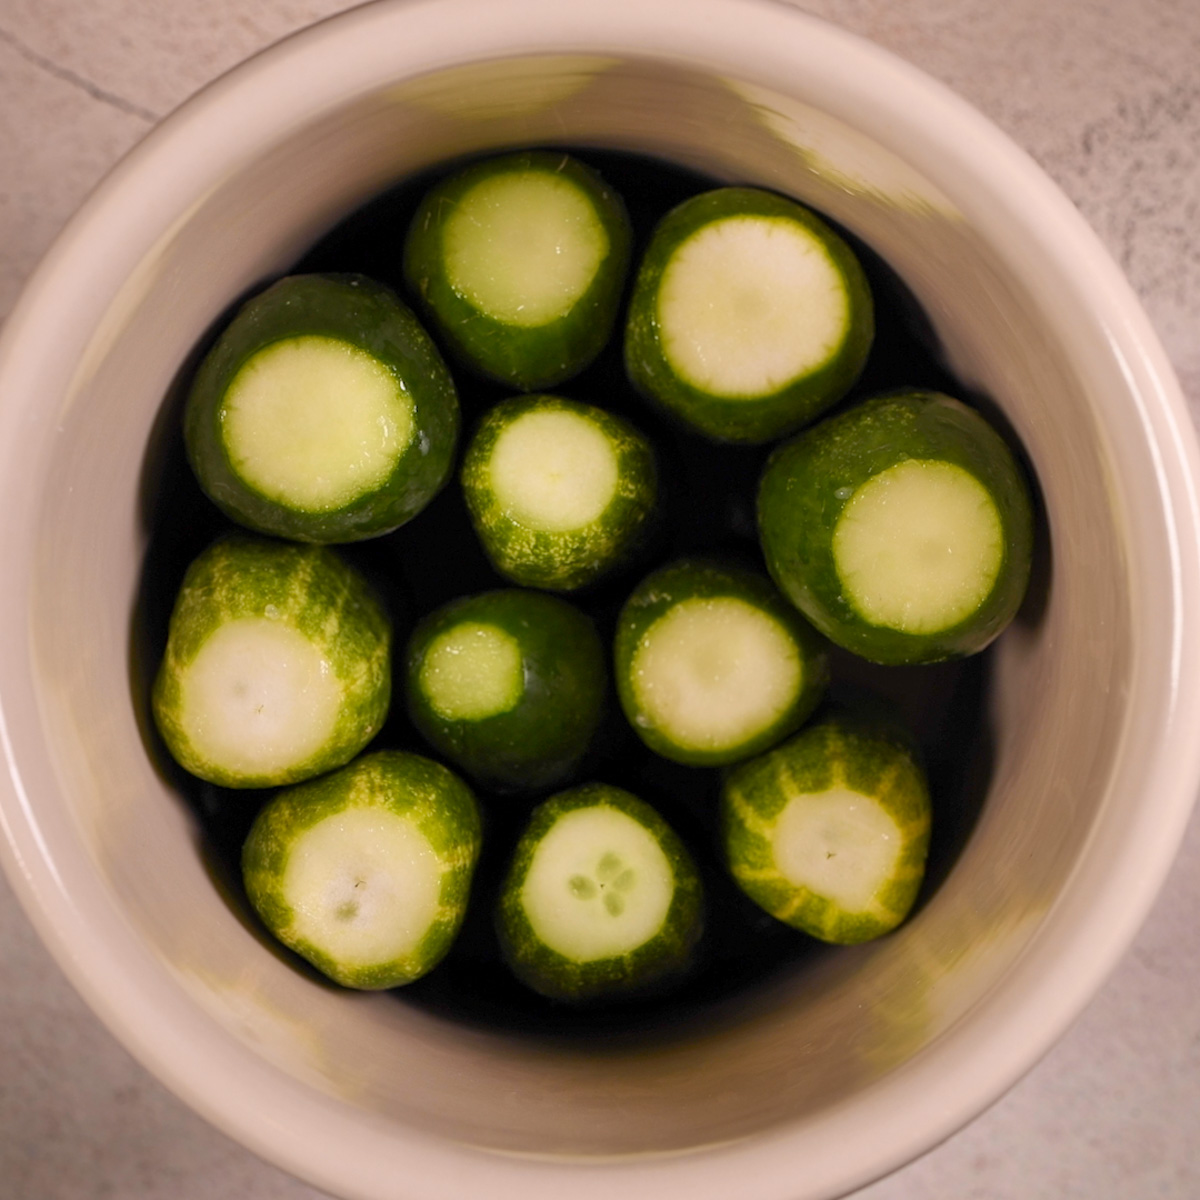 Place cucumbers in a pickling crock.